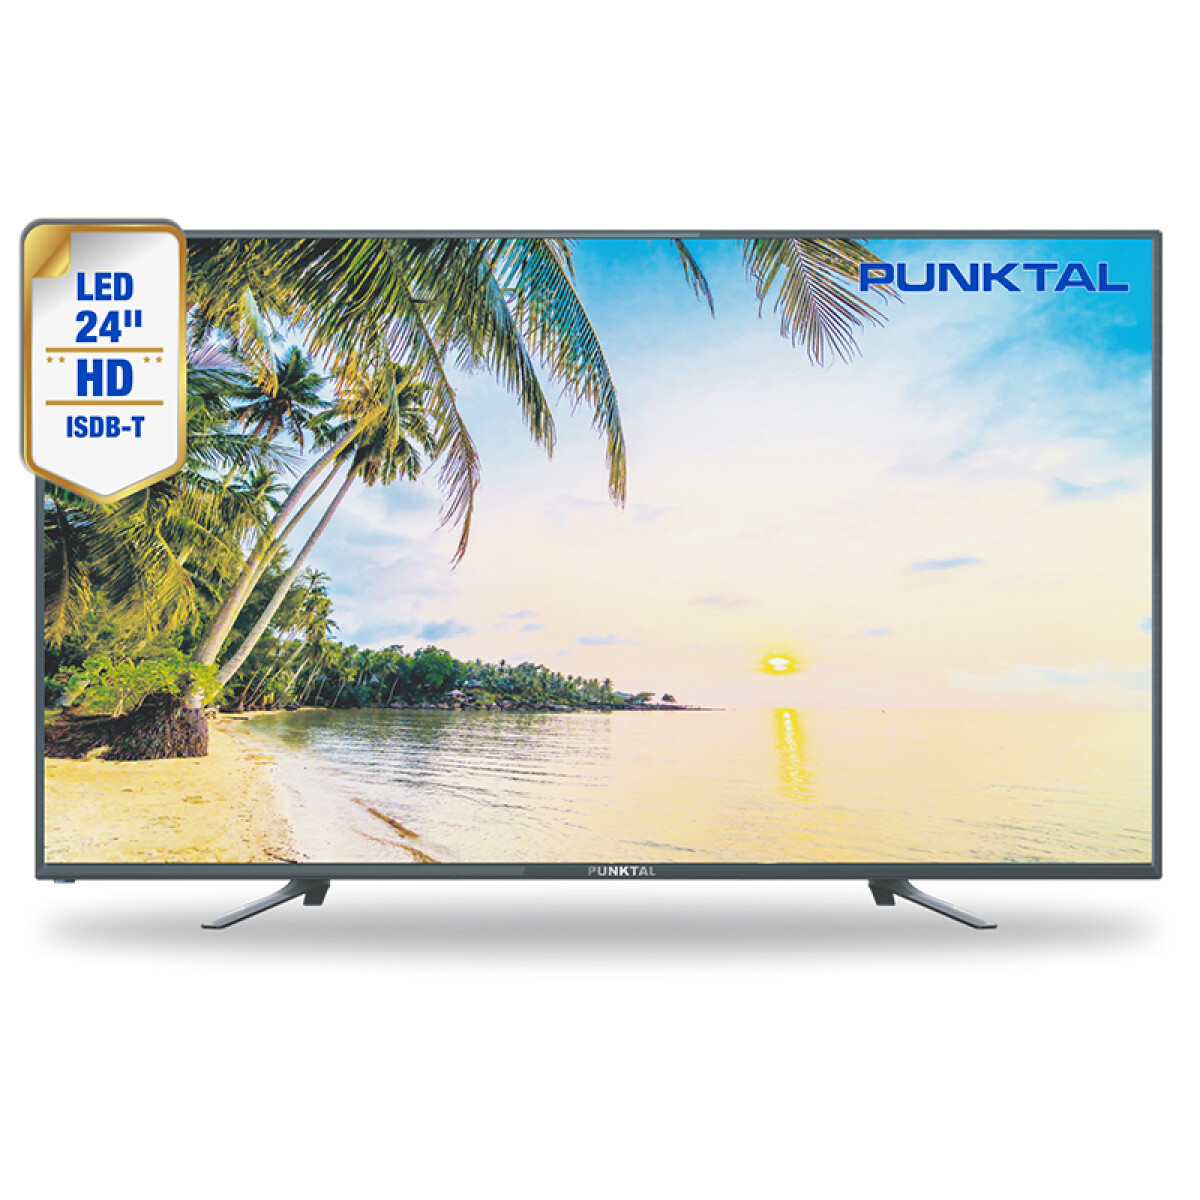 TV LED 24" HD Punktal 